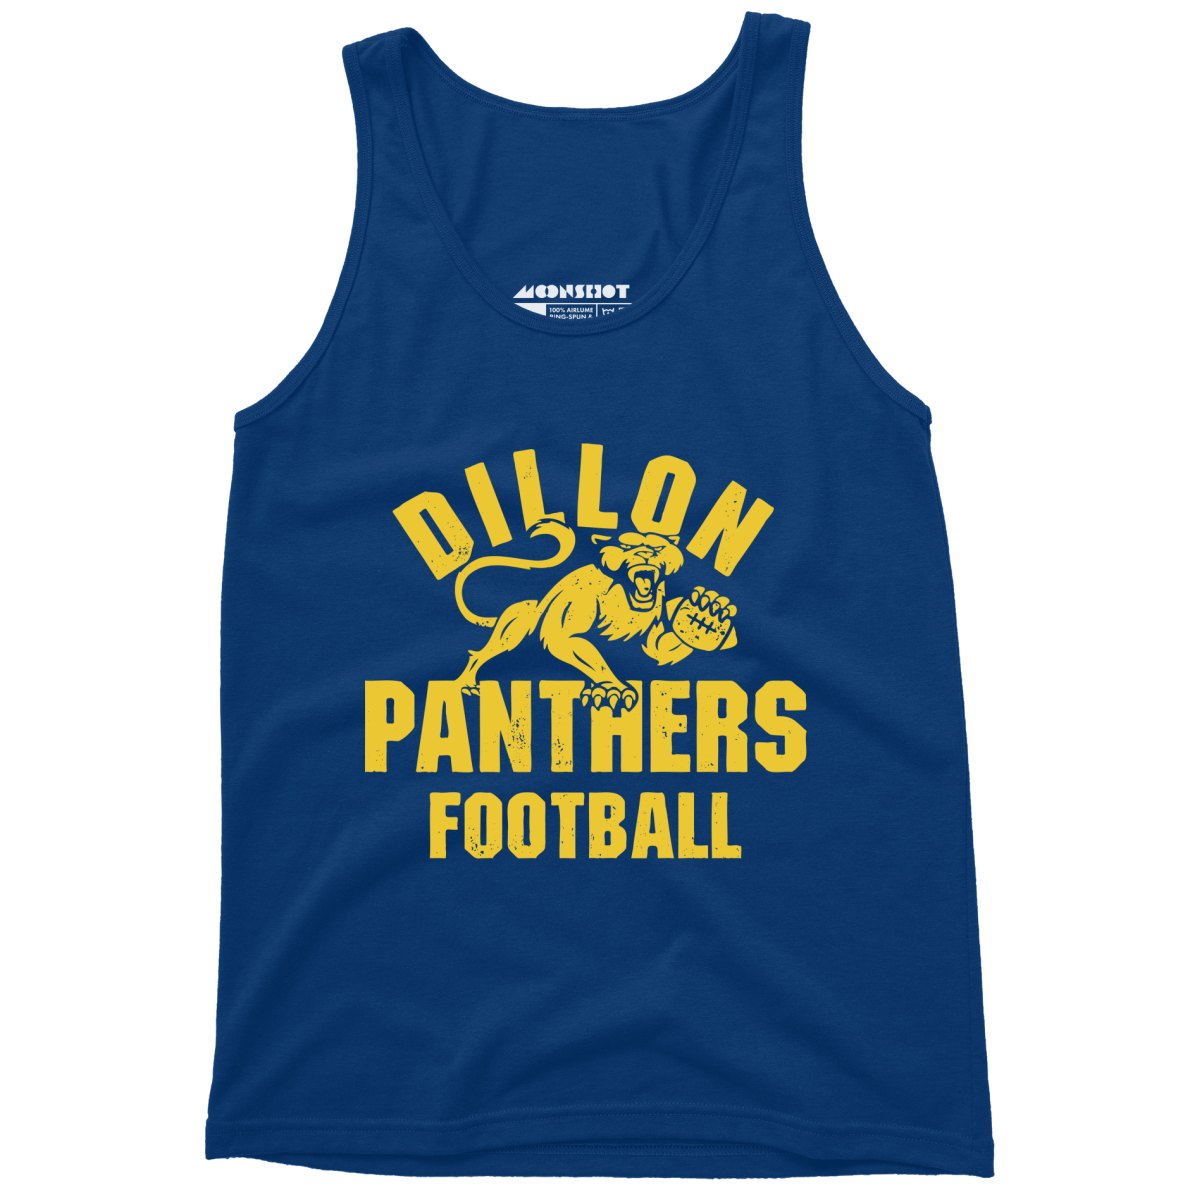 Dillon Panthers Football - Unisex Tank Top